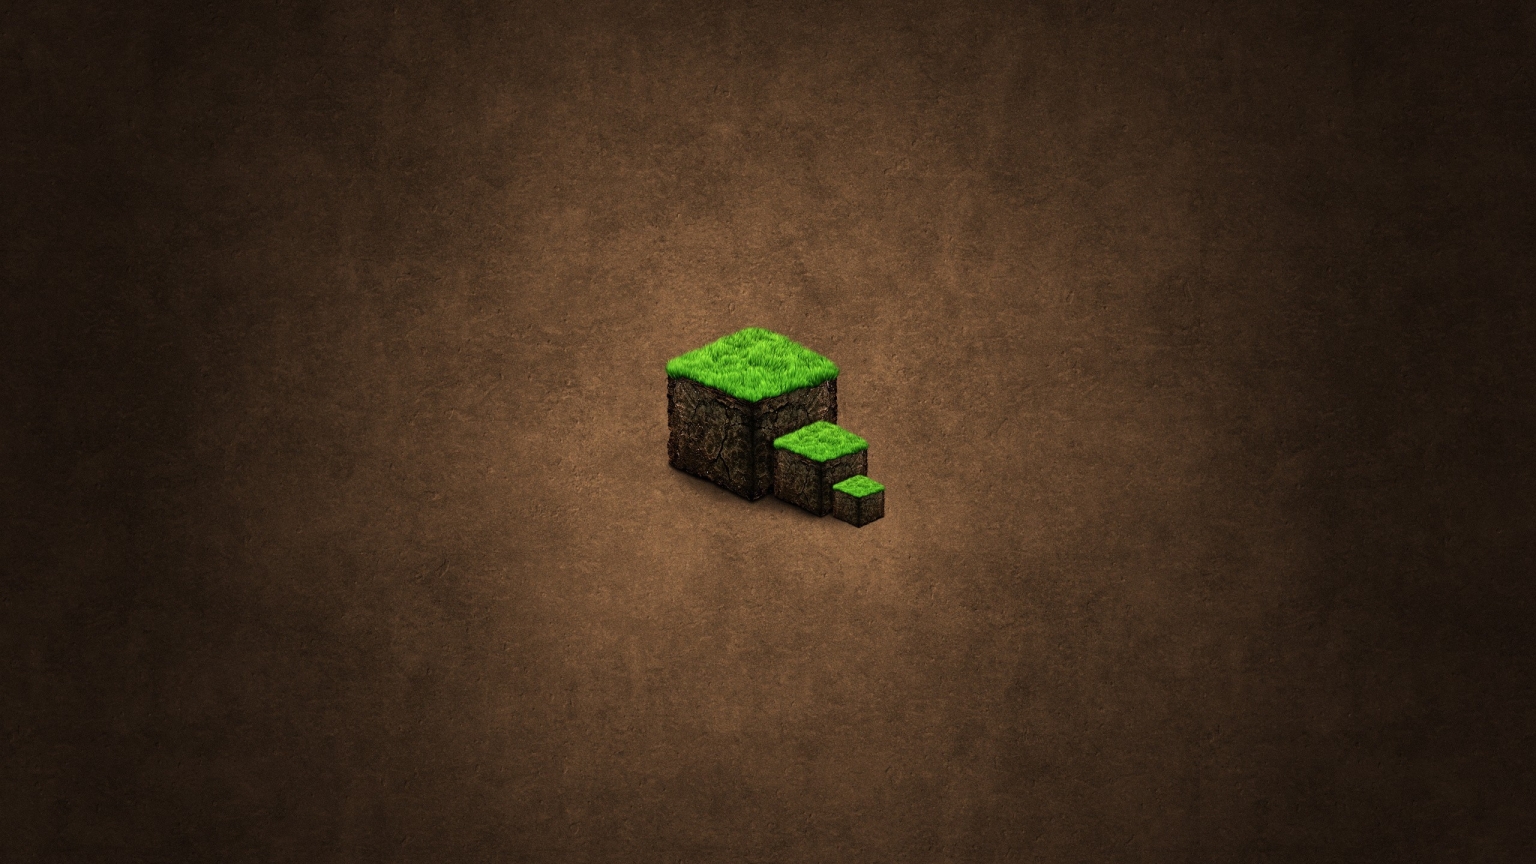 Minecraft Green Cubes for 1536 x 864 HDTV resolution